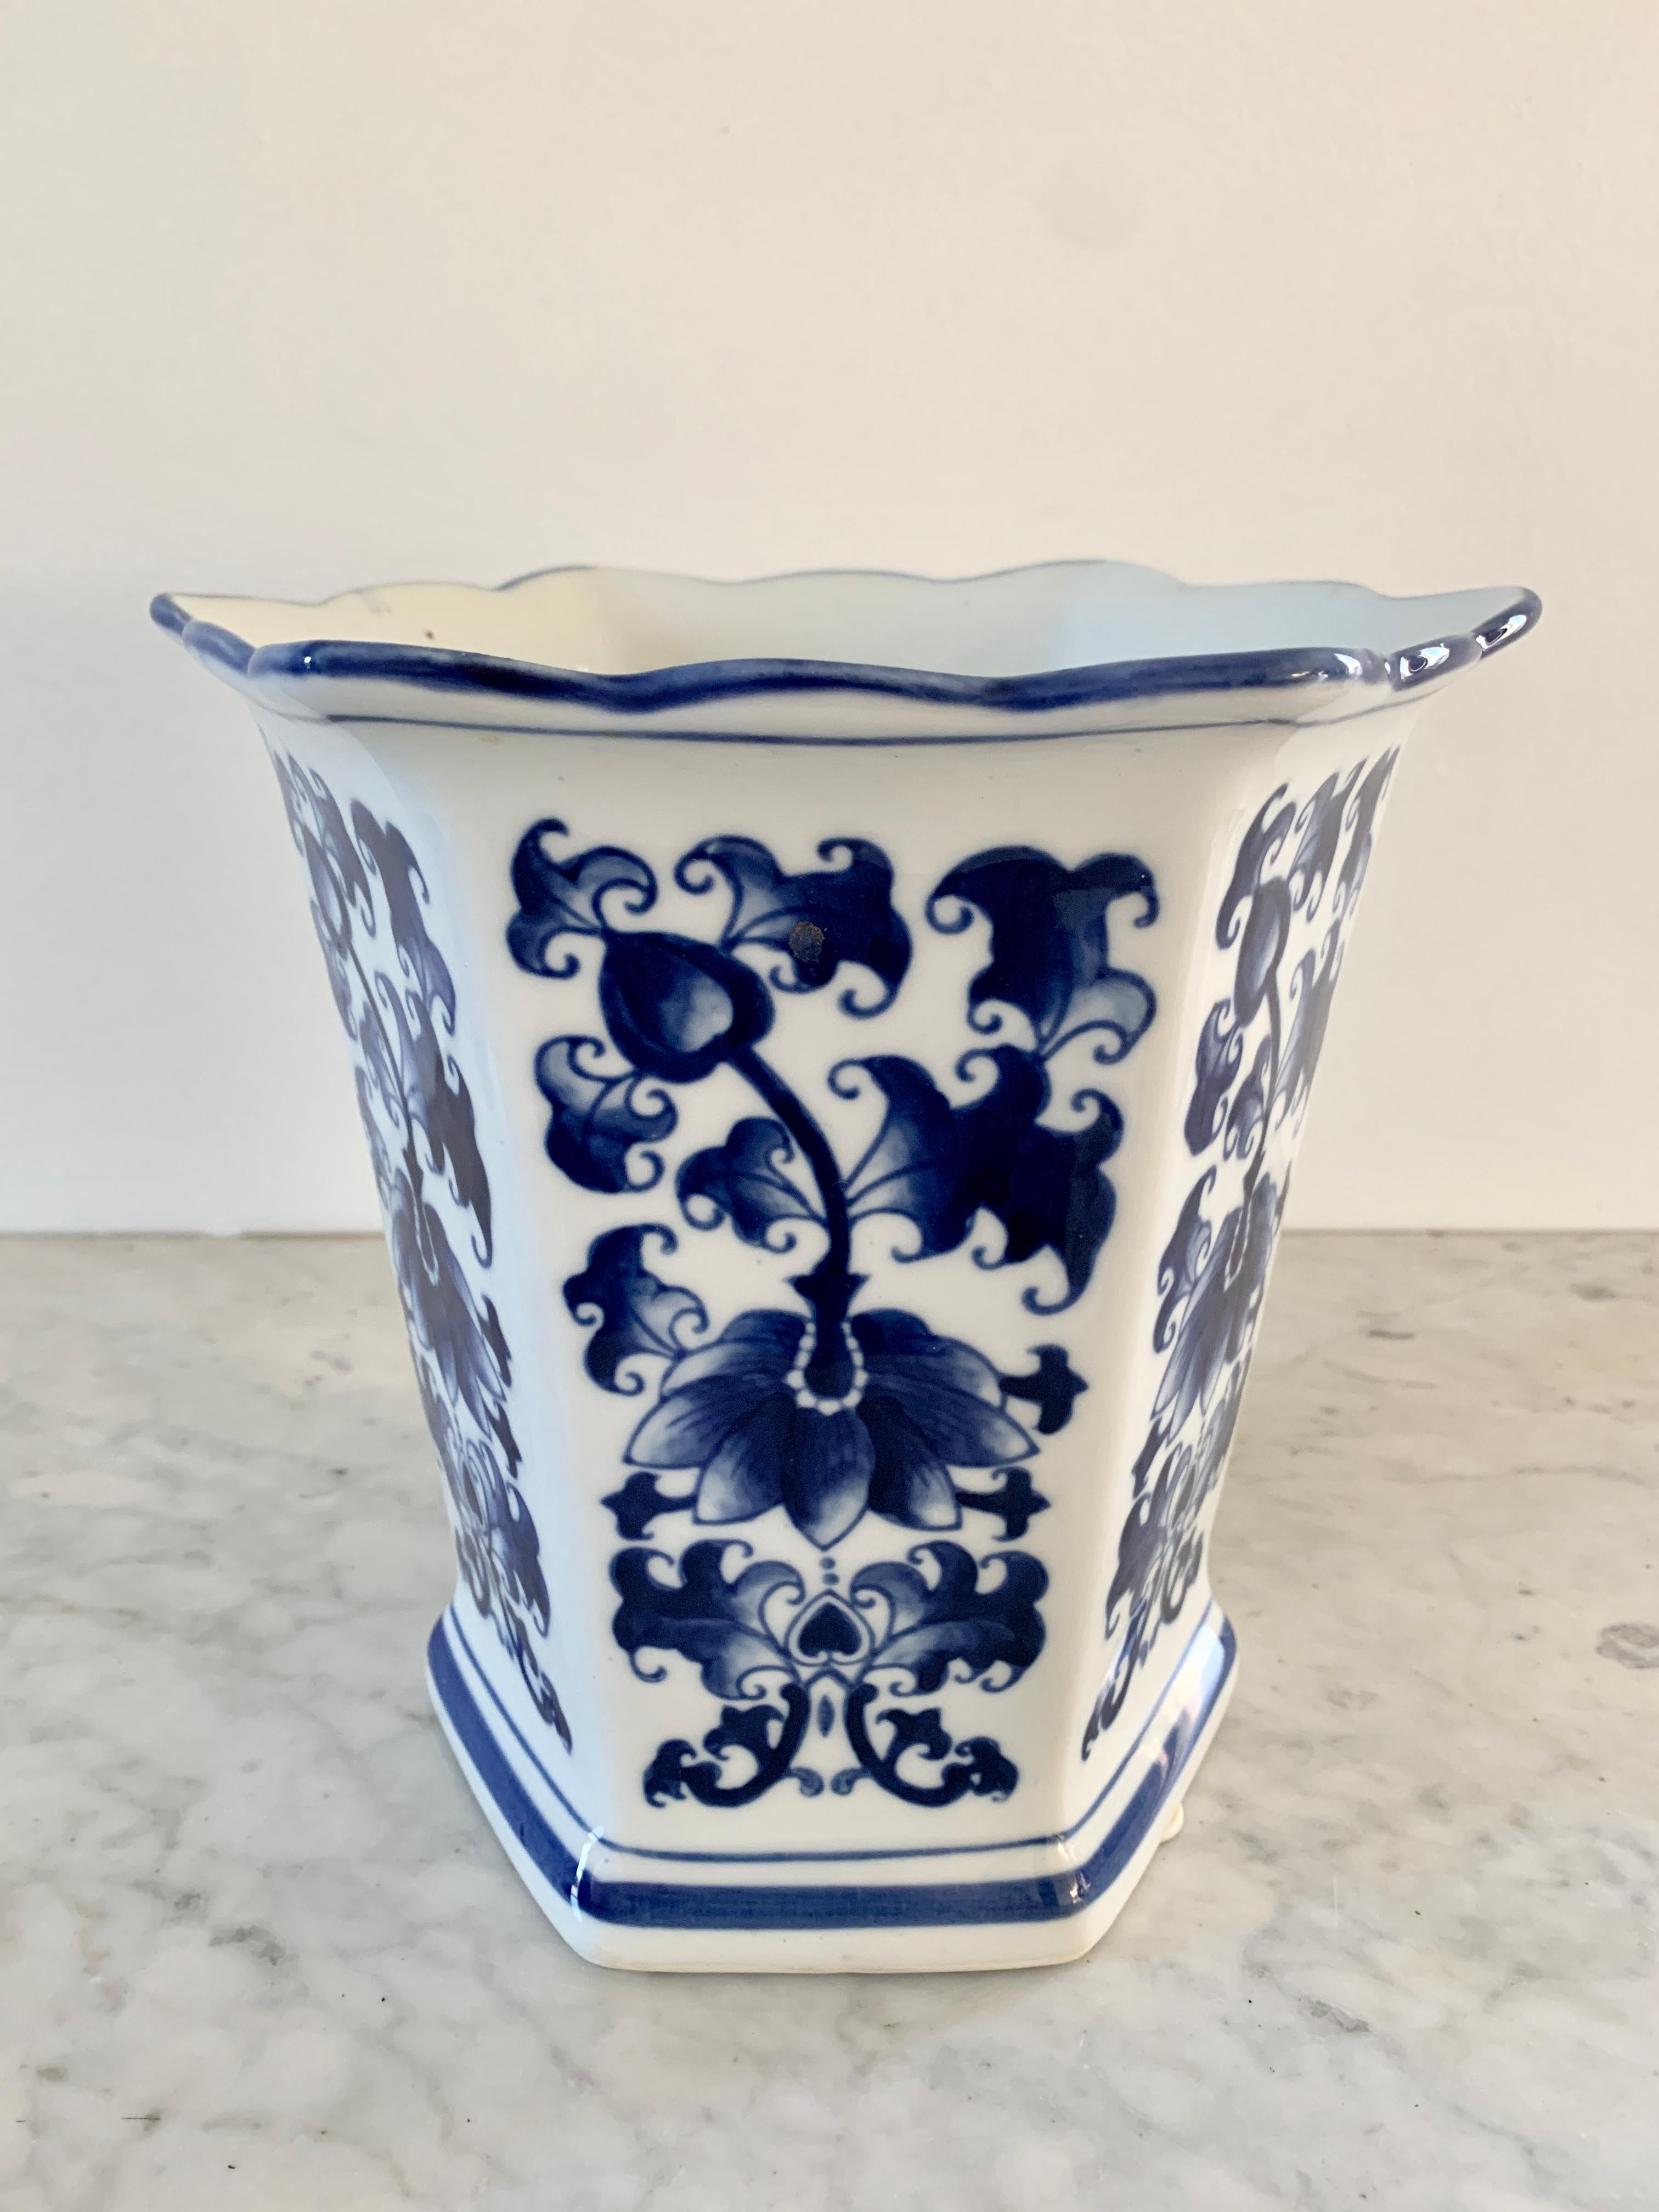 Chinoiserie Blue and White Porcelain Hexagonal Vases, Pair For Sale 1